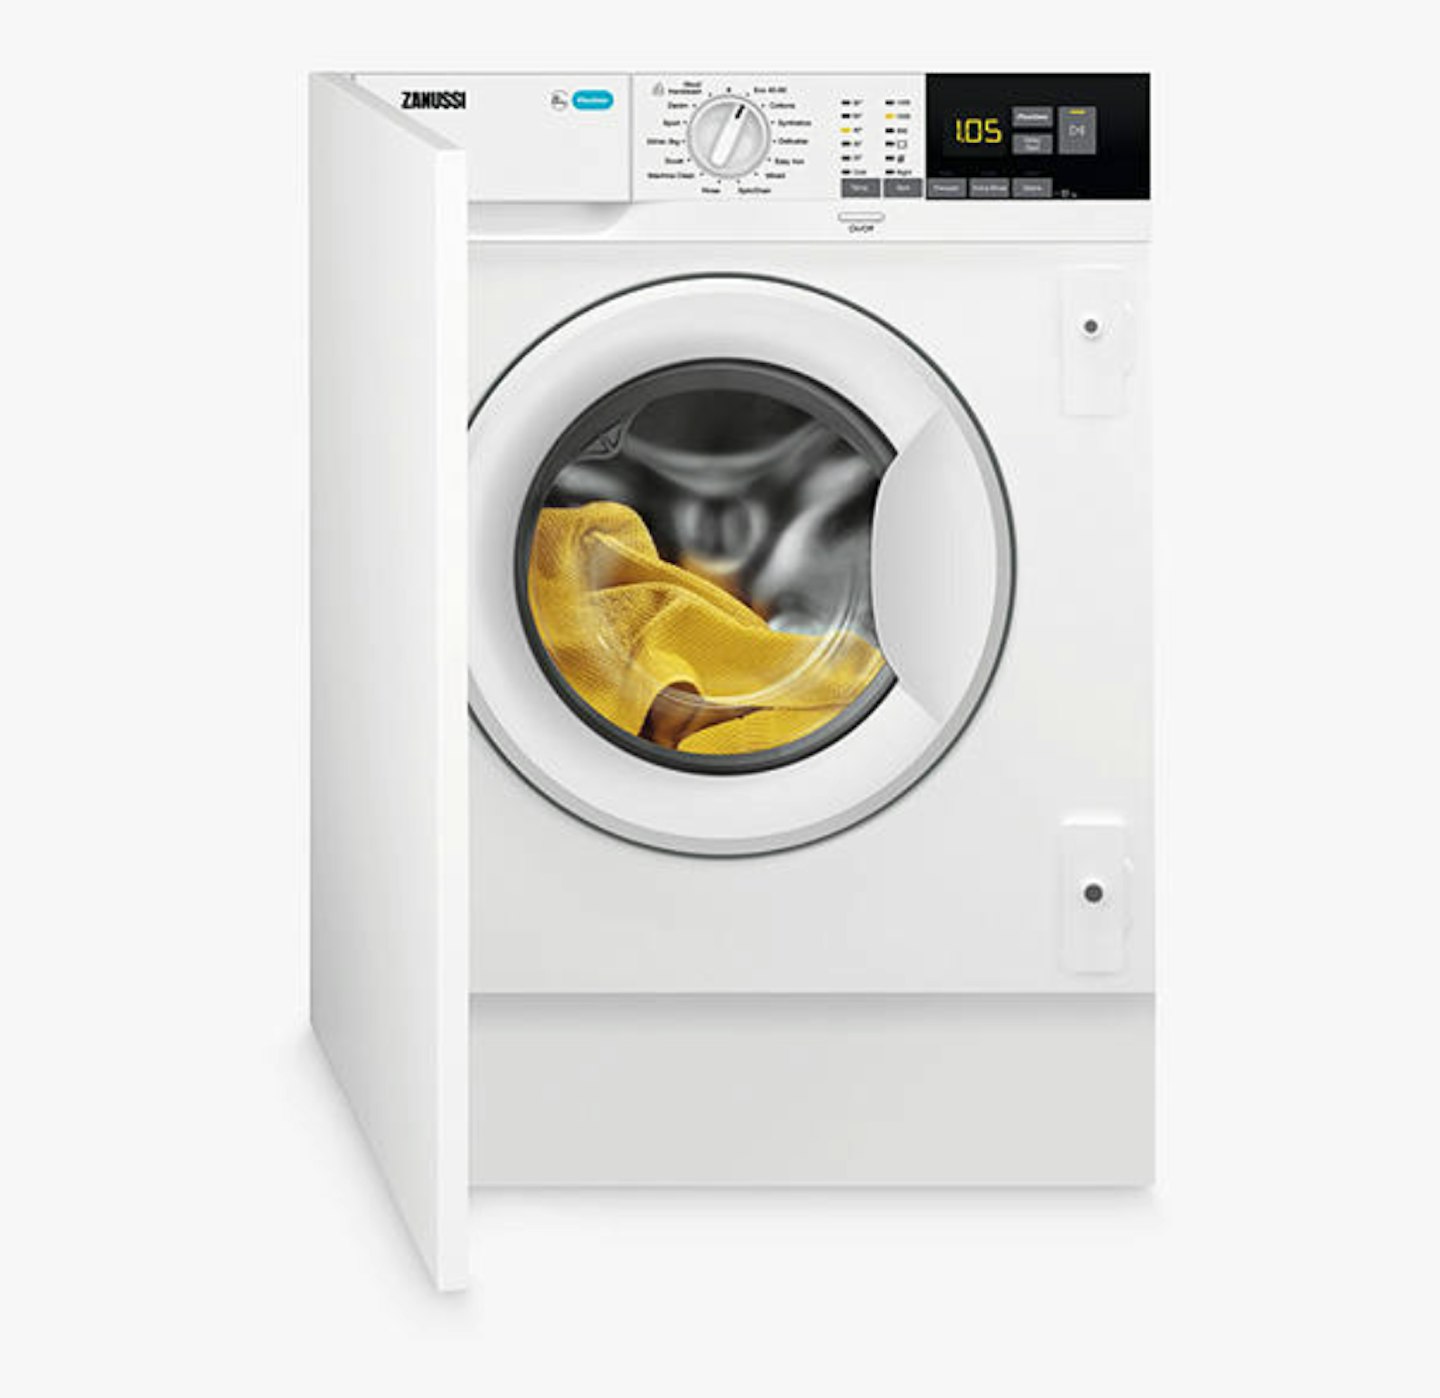 Z814W85BI Integrated Washing Machine, 8kg Load, 1400rpm Spin, White